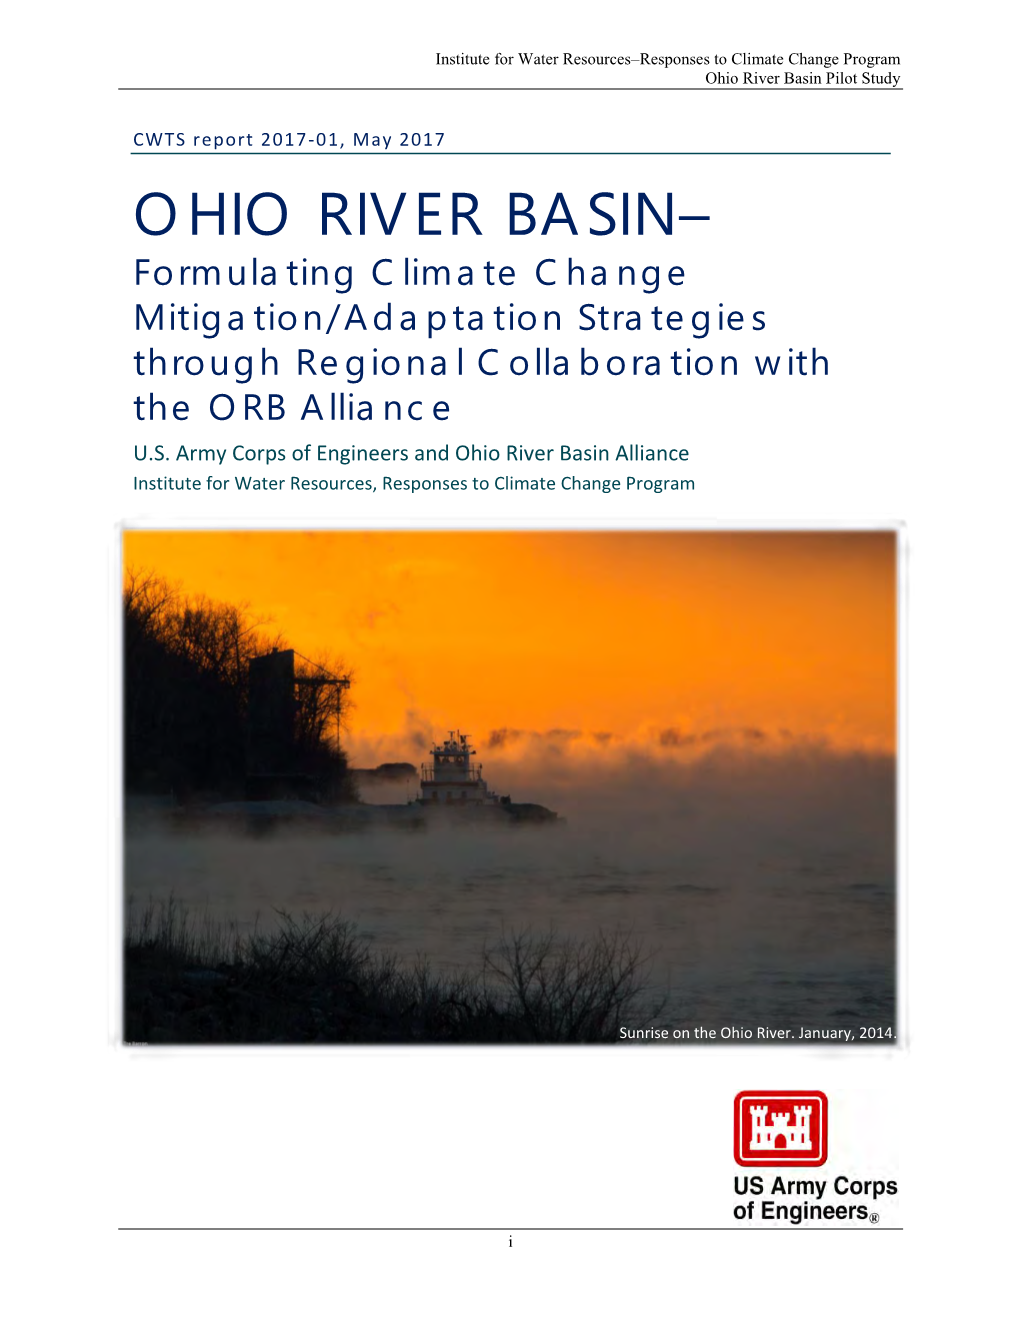 Ohio River Basin Pilot Study